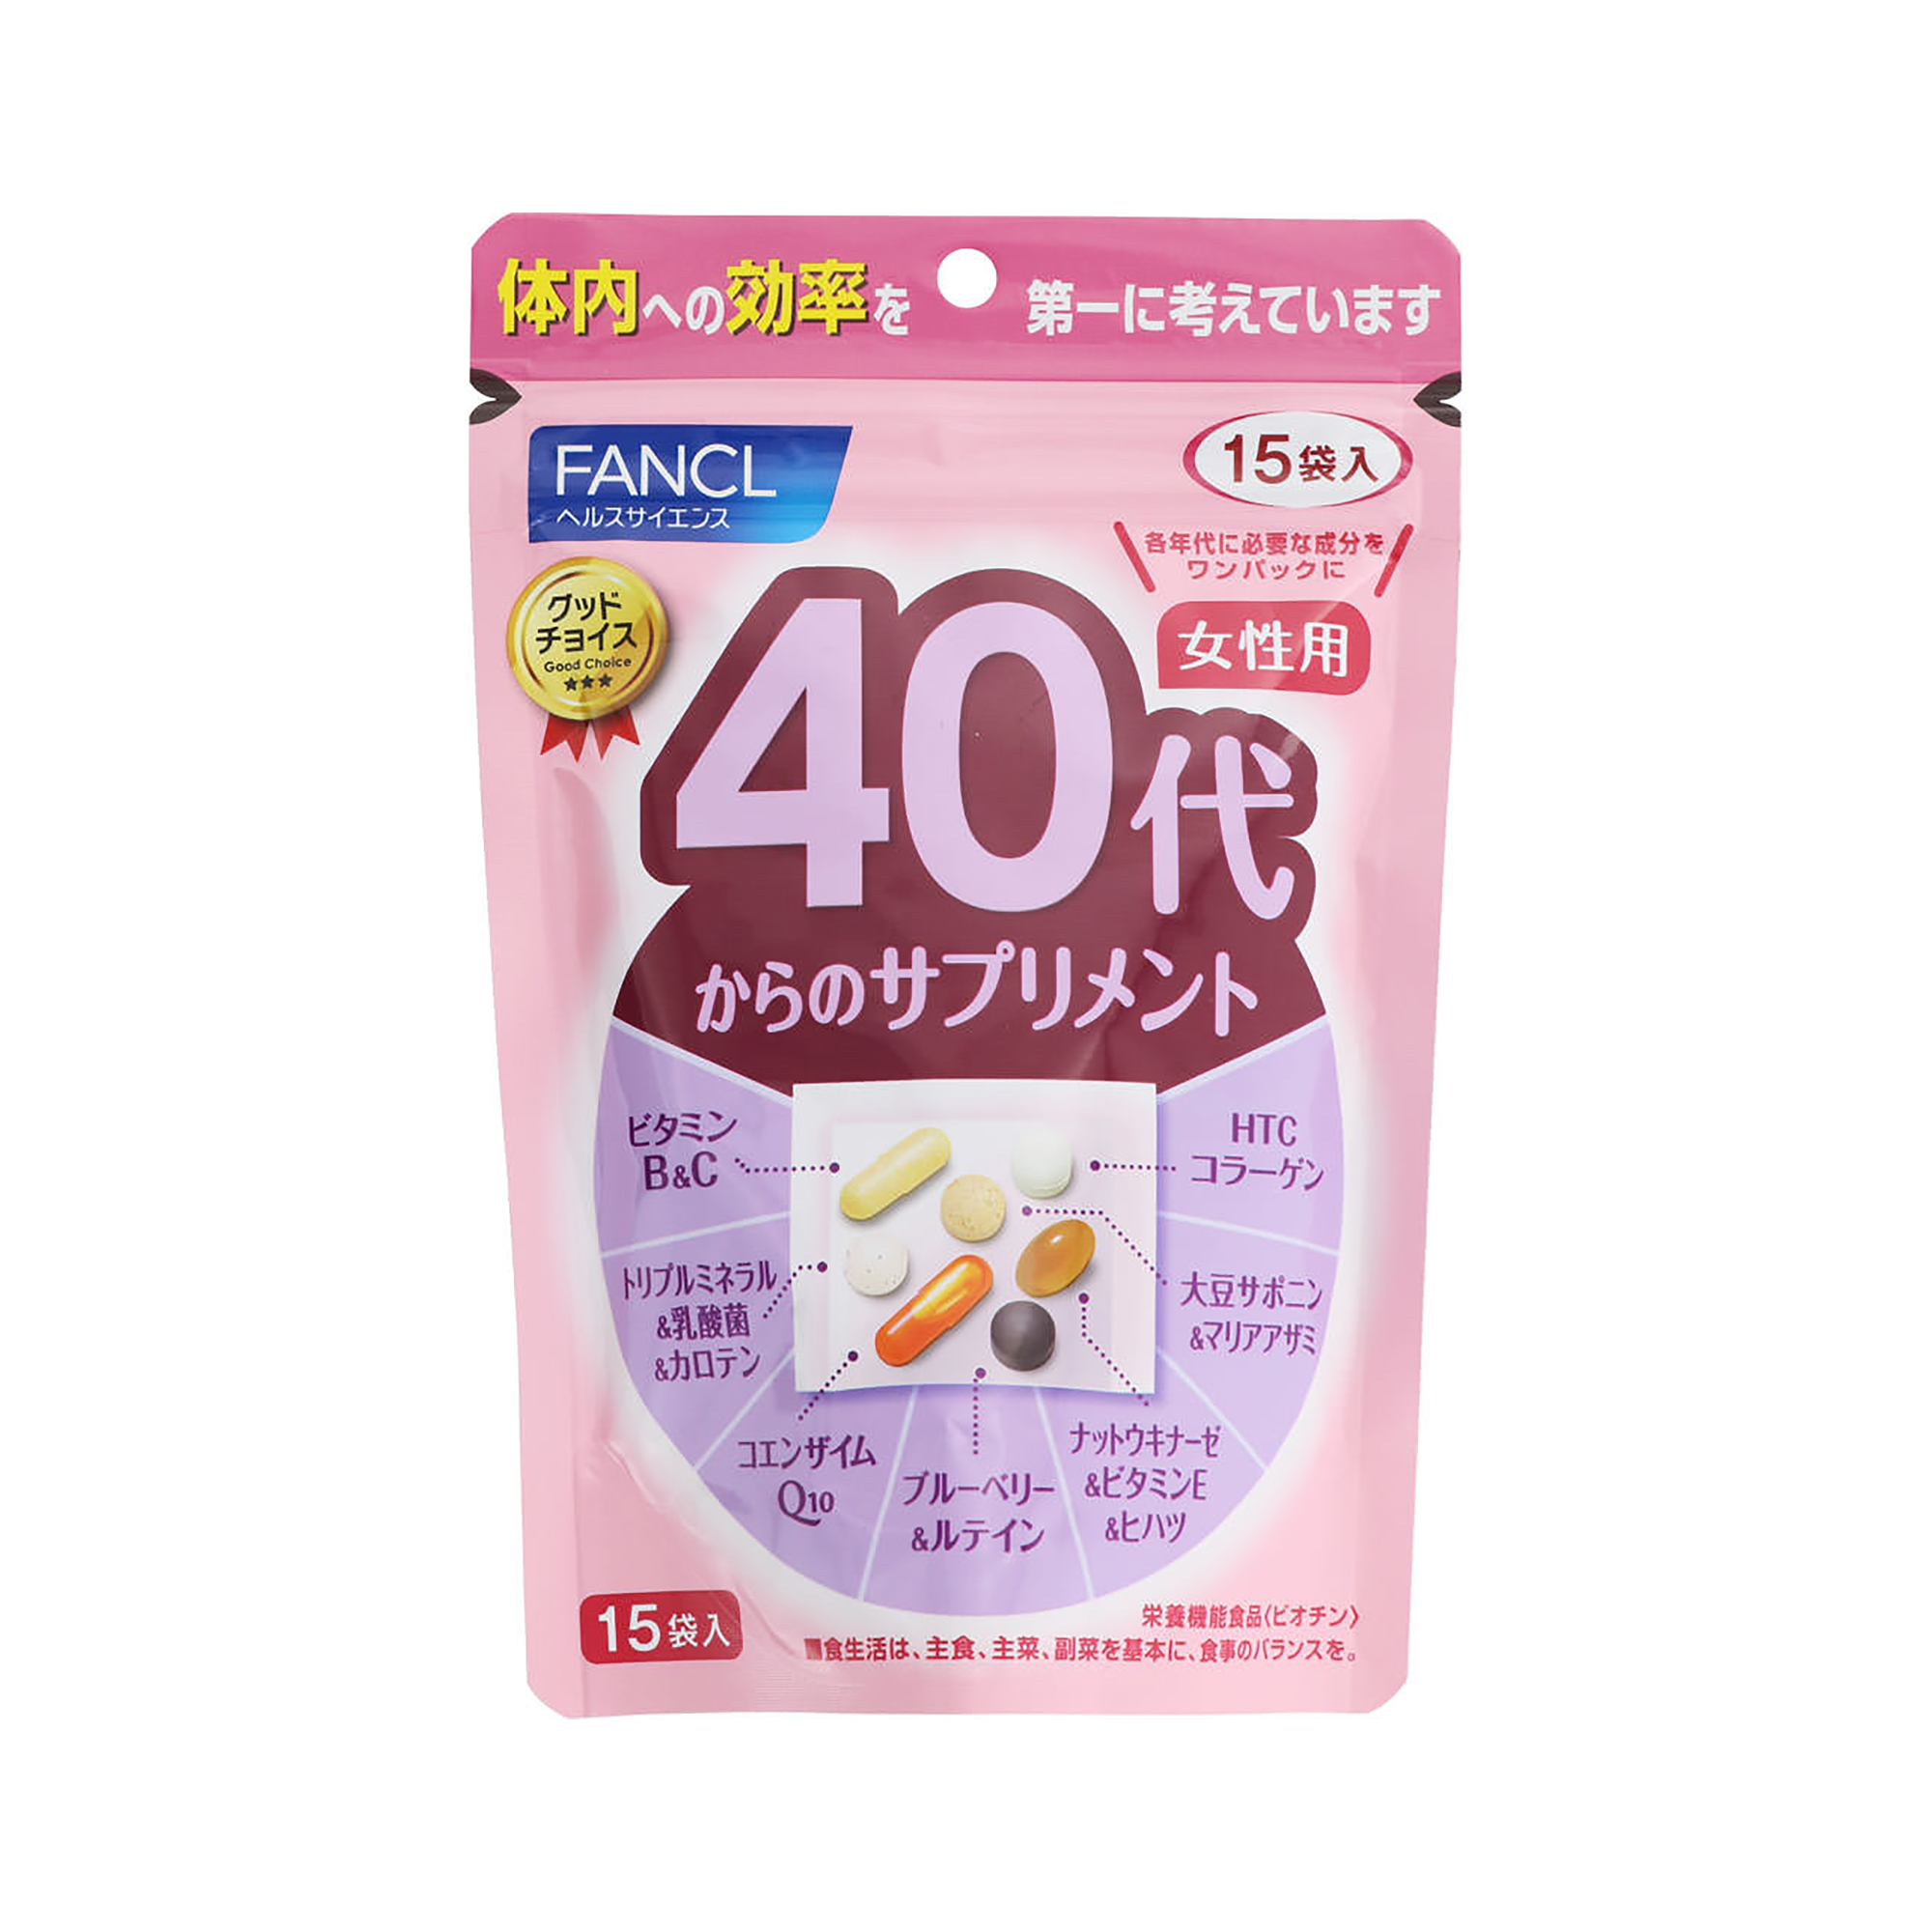 FANCL 40代女性綜合營養包 7粒×15袋